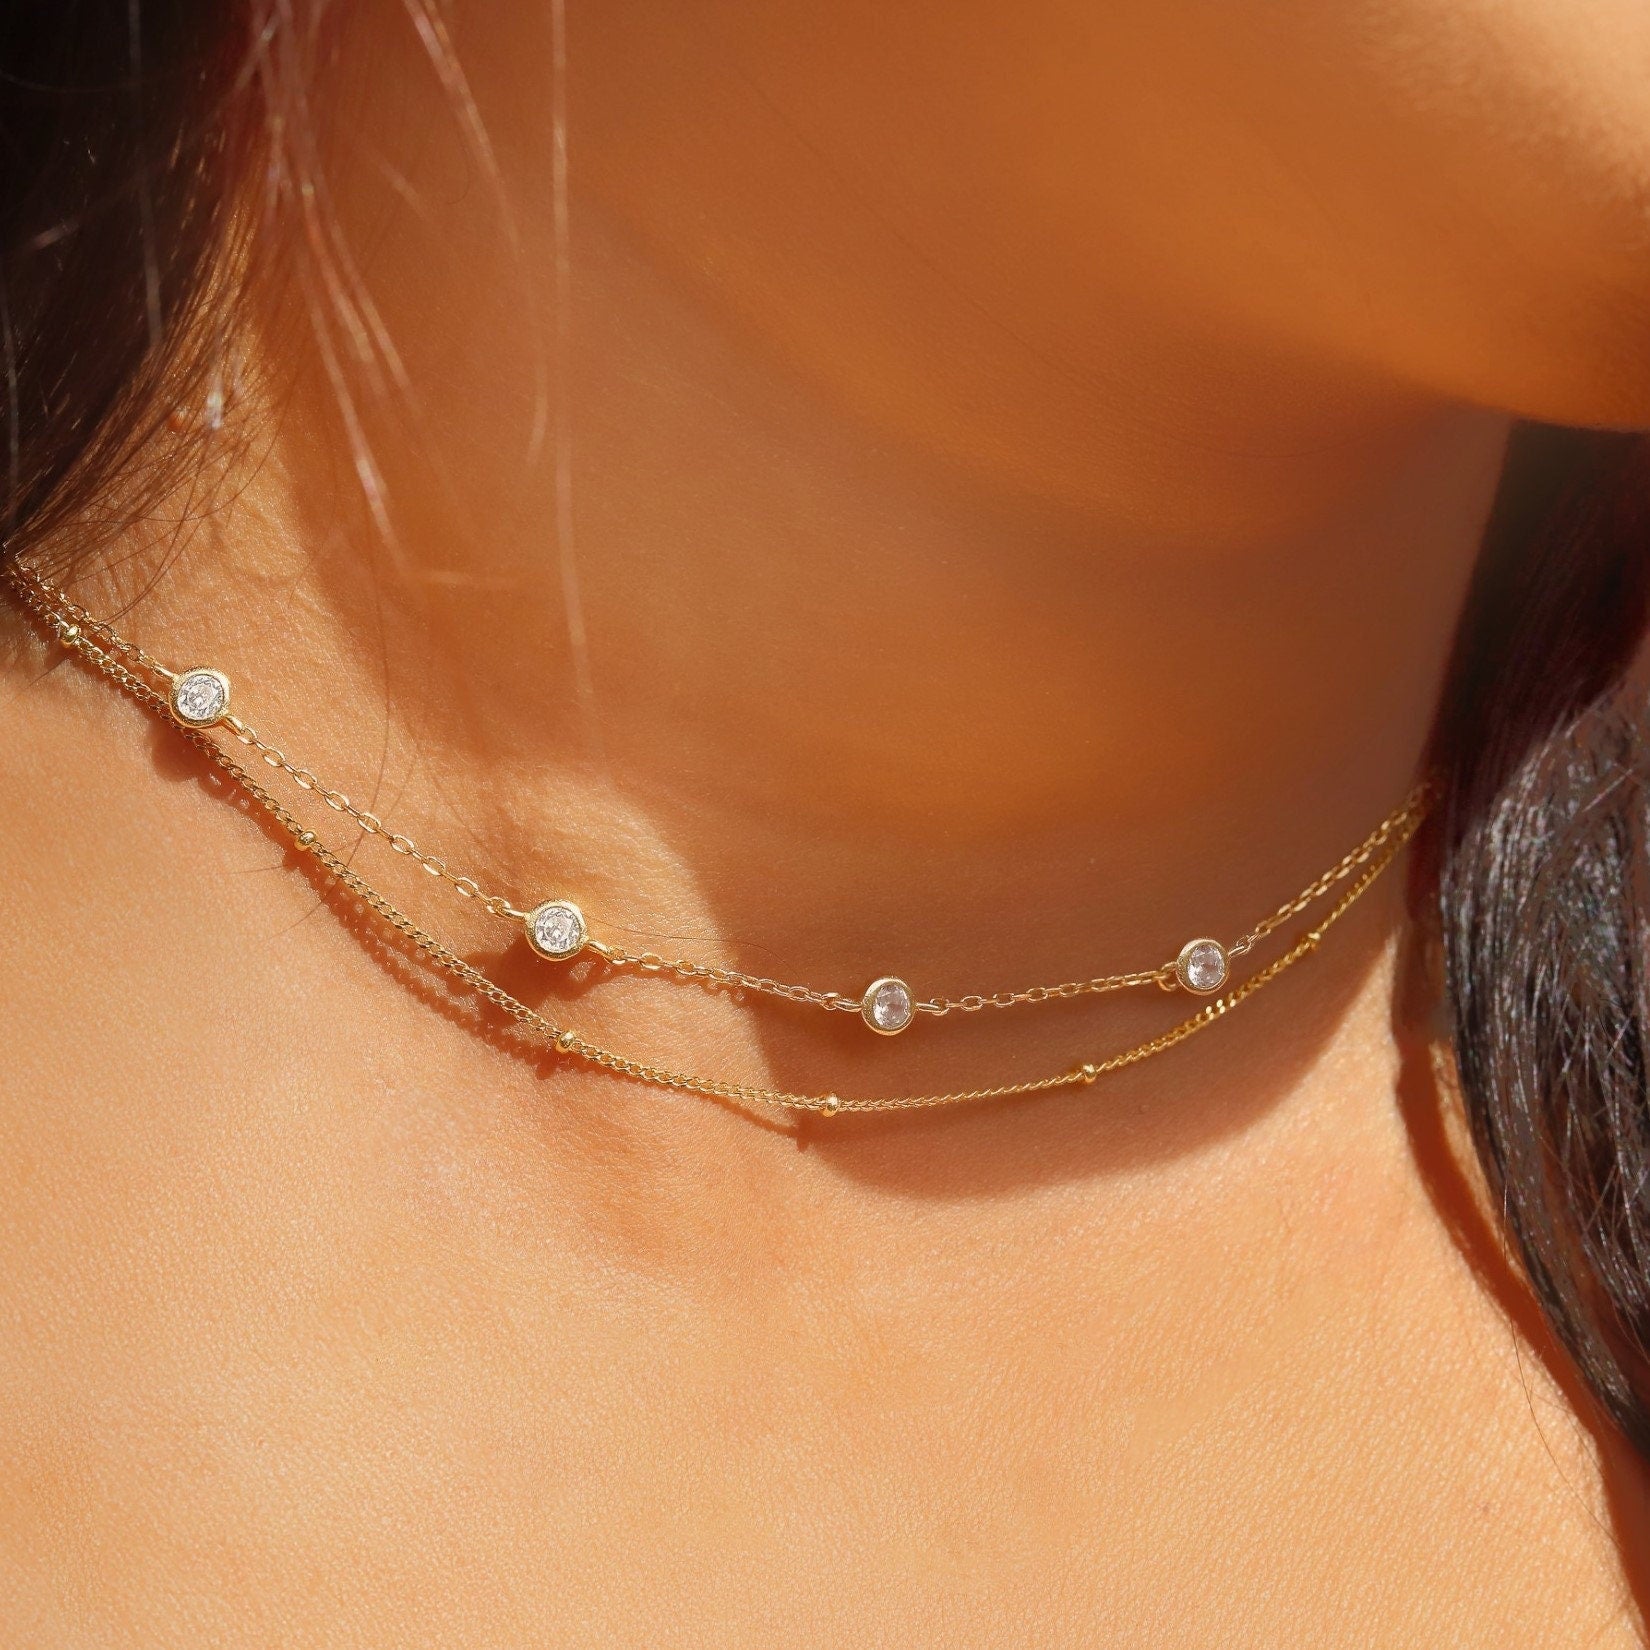 Beth - satellite Necklace, CZ Bobble necklace, Choker Necklace - Delicate Choker Necklaces, Satellite Chain, Gold Choker Necklace